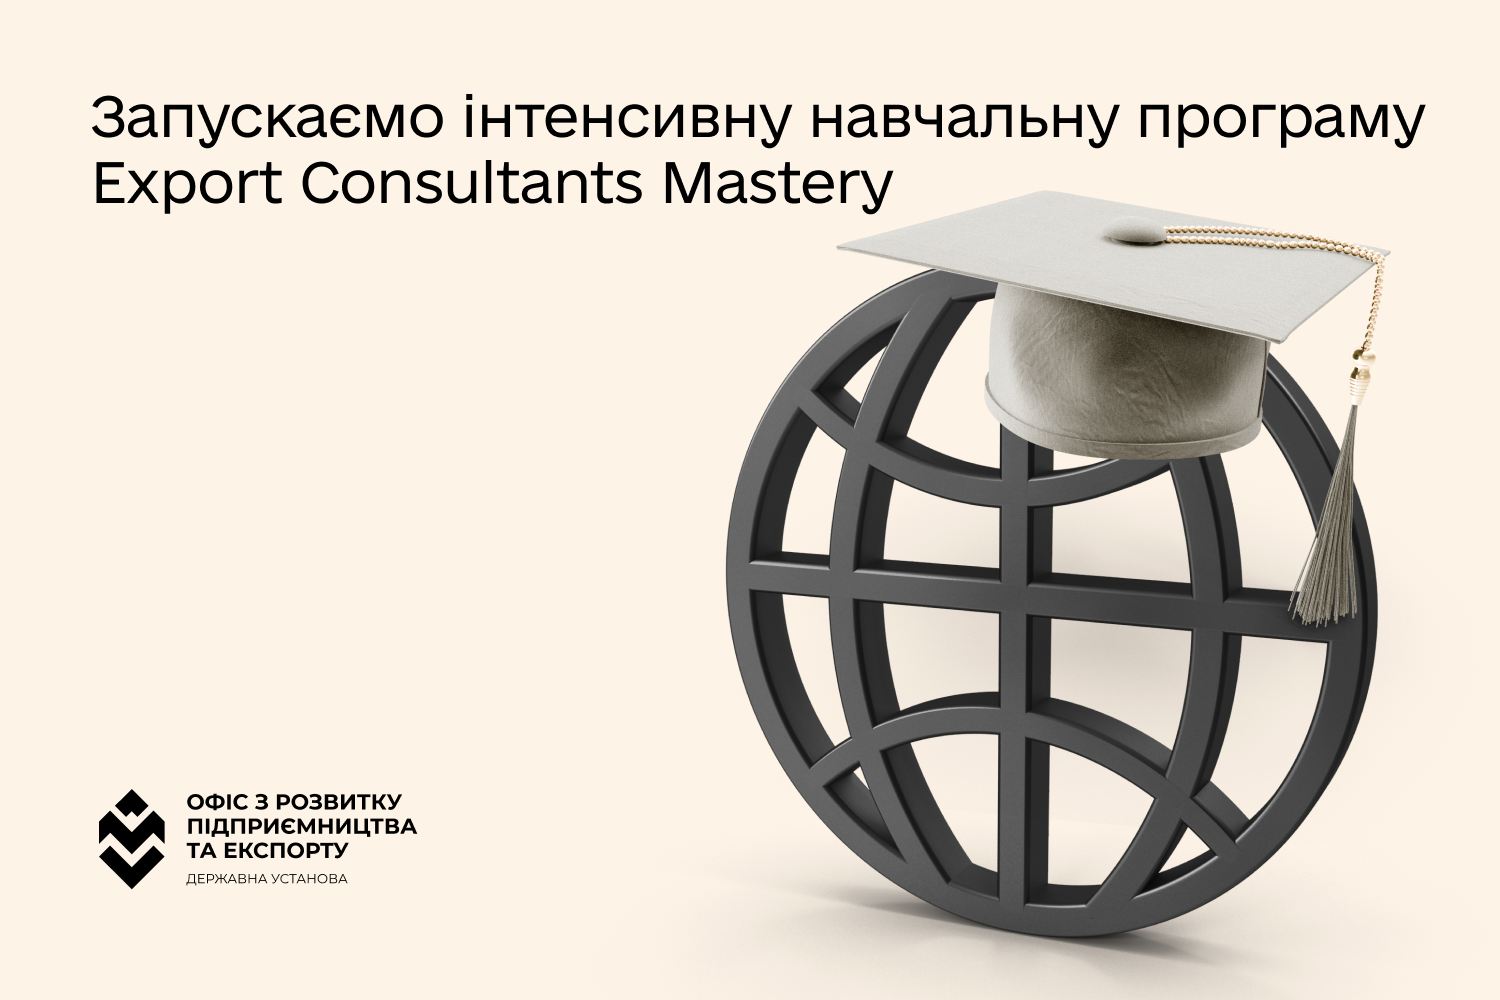 Запрошують на навчання на програму Export Consultants Mastery